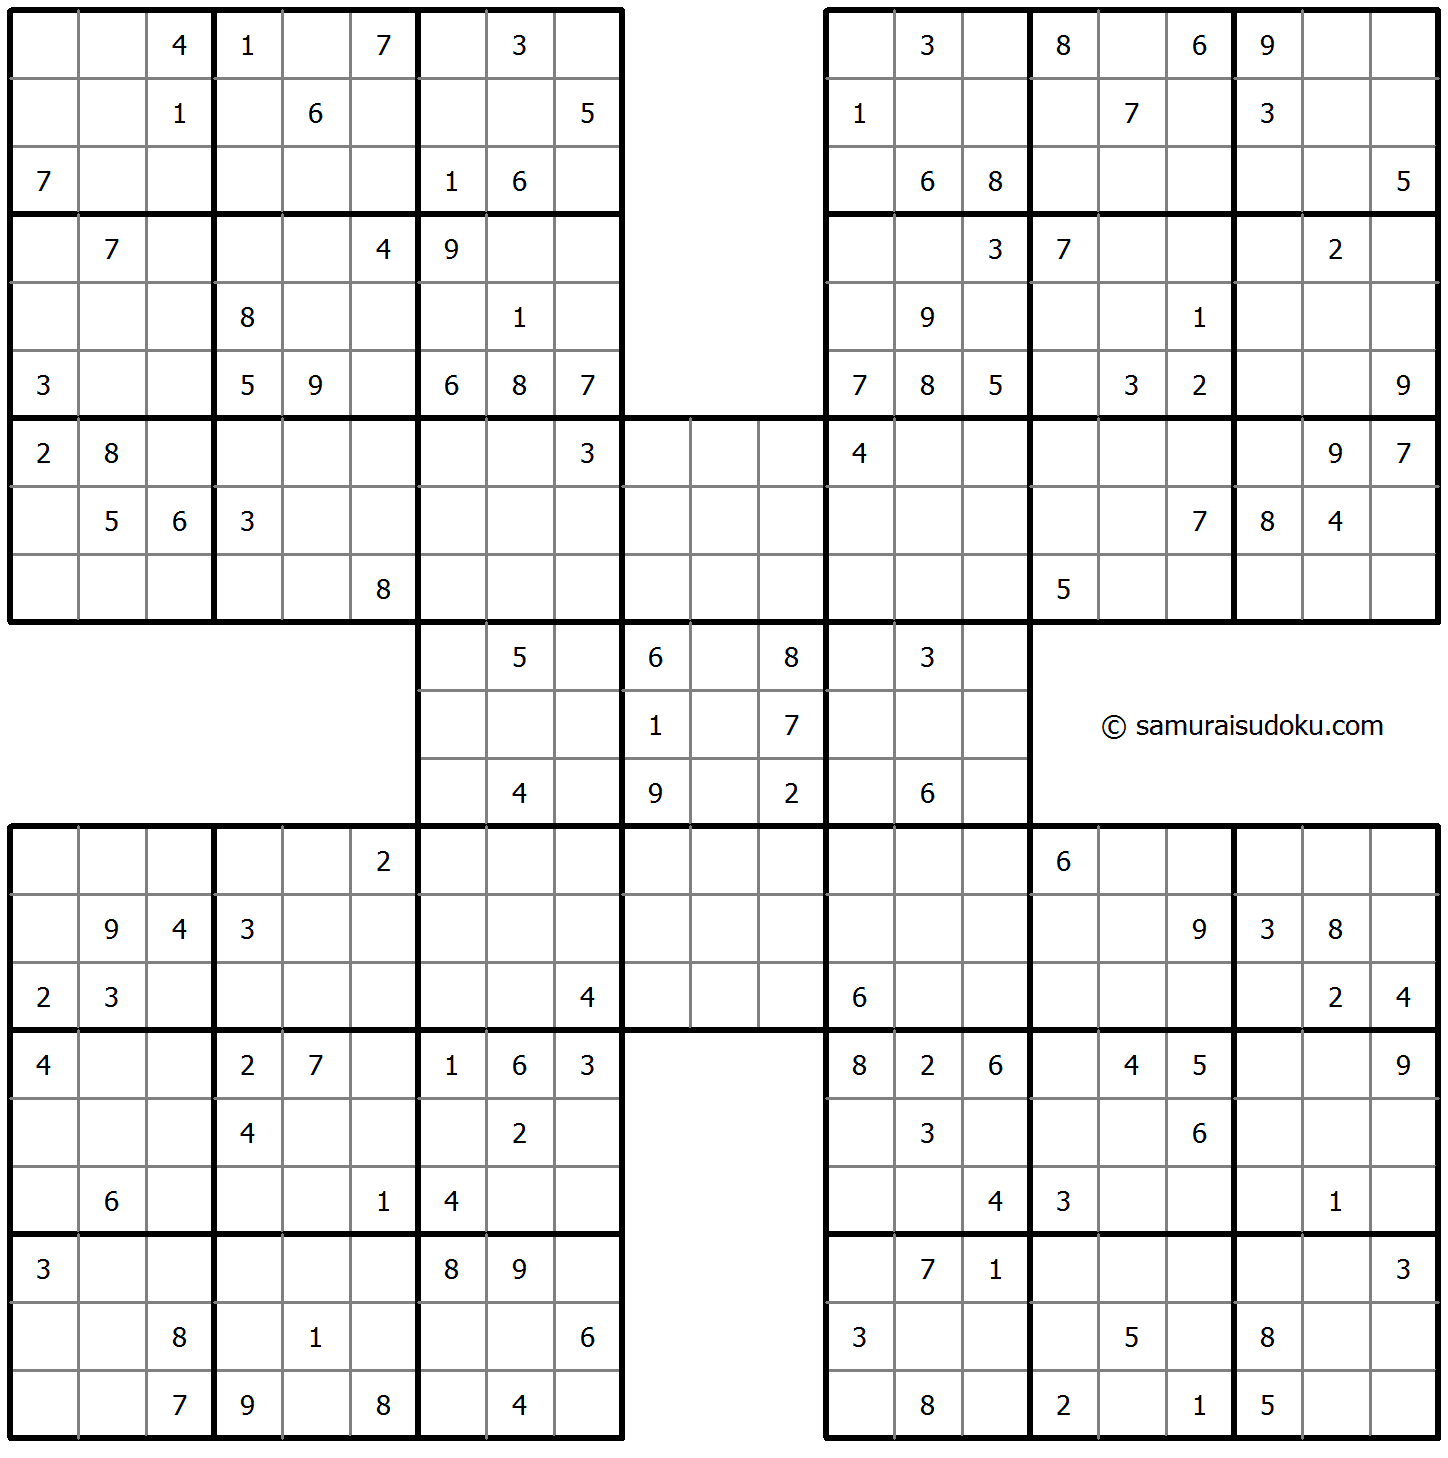 Samurai Sudoku 15-March-2022